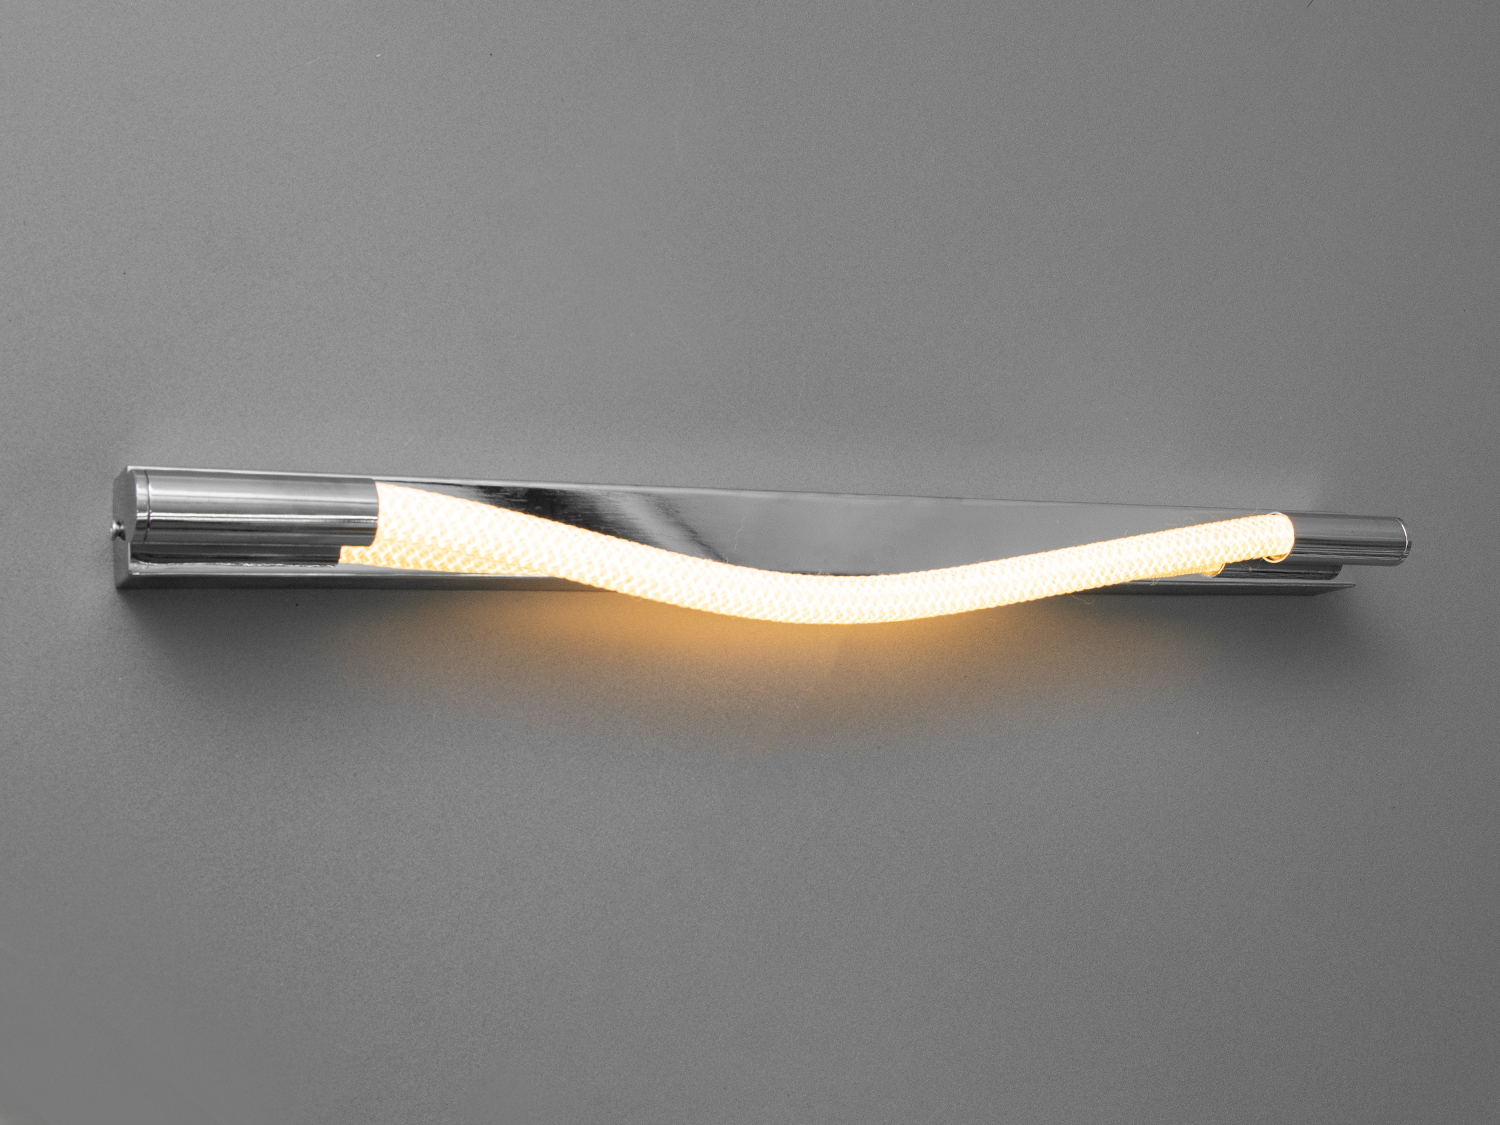 Світлодіодний світильник Шланг, 5Вт, срібного кольоруСветодиодные бра, Светильники LED, Потолочные, Серия 